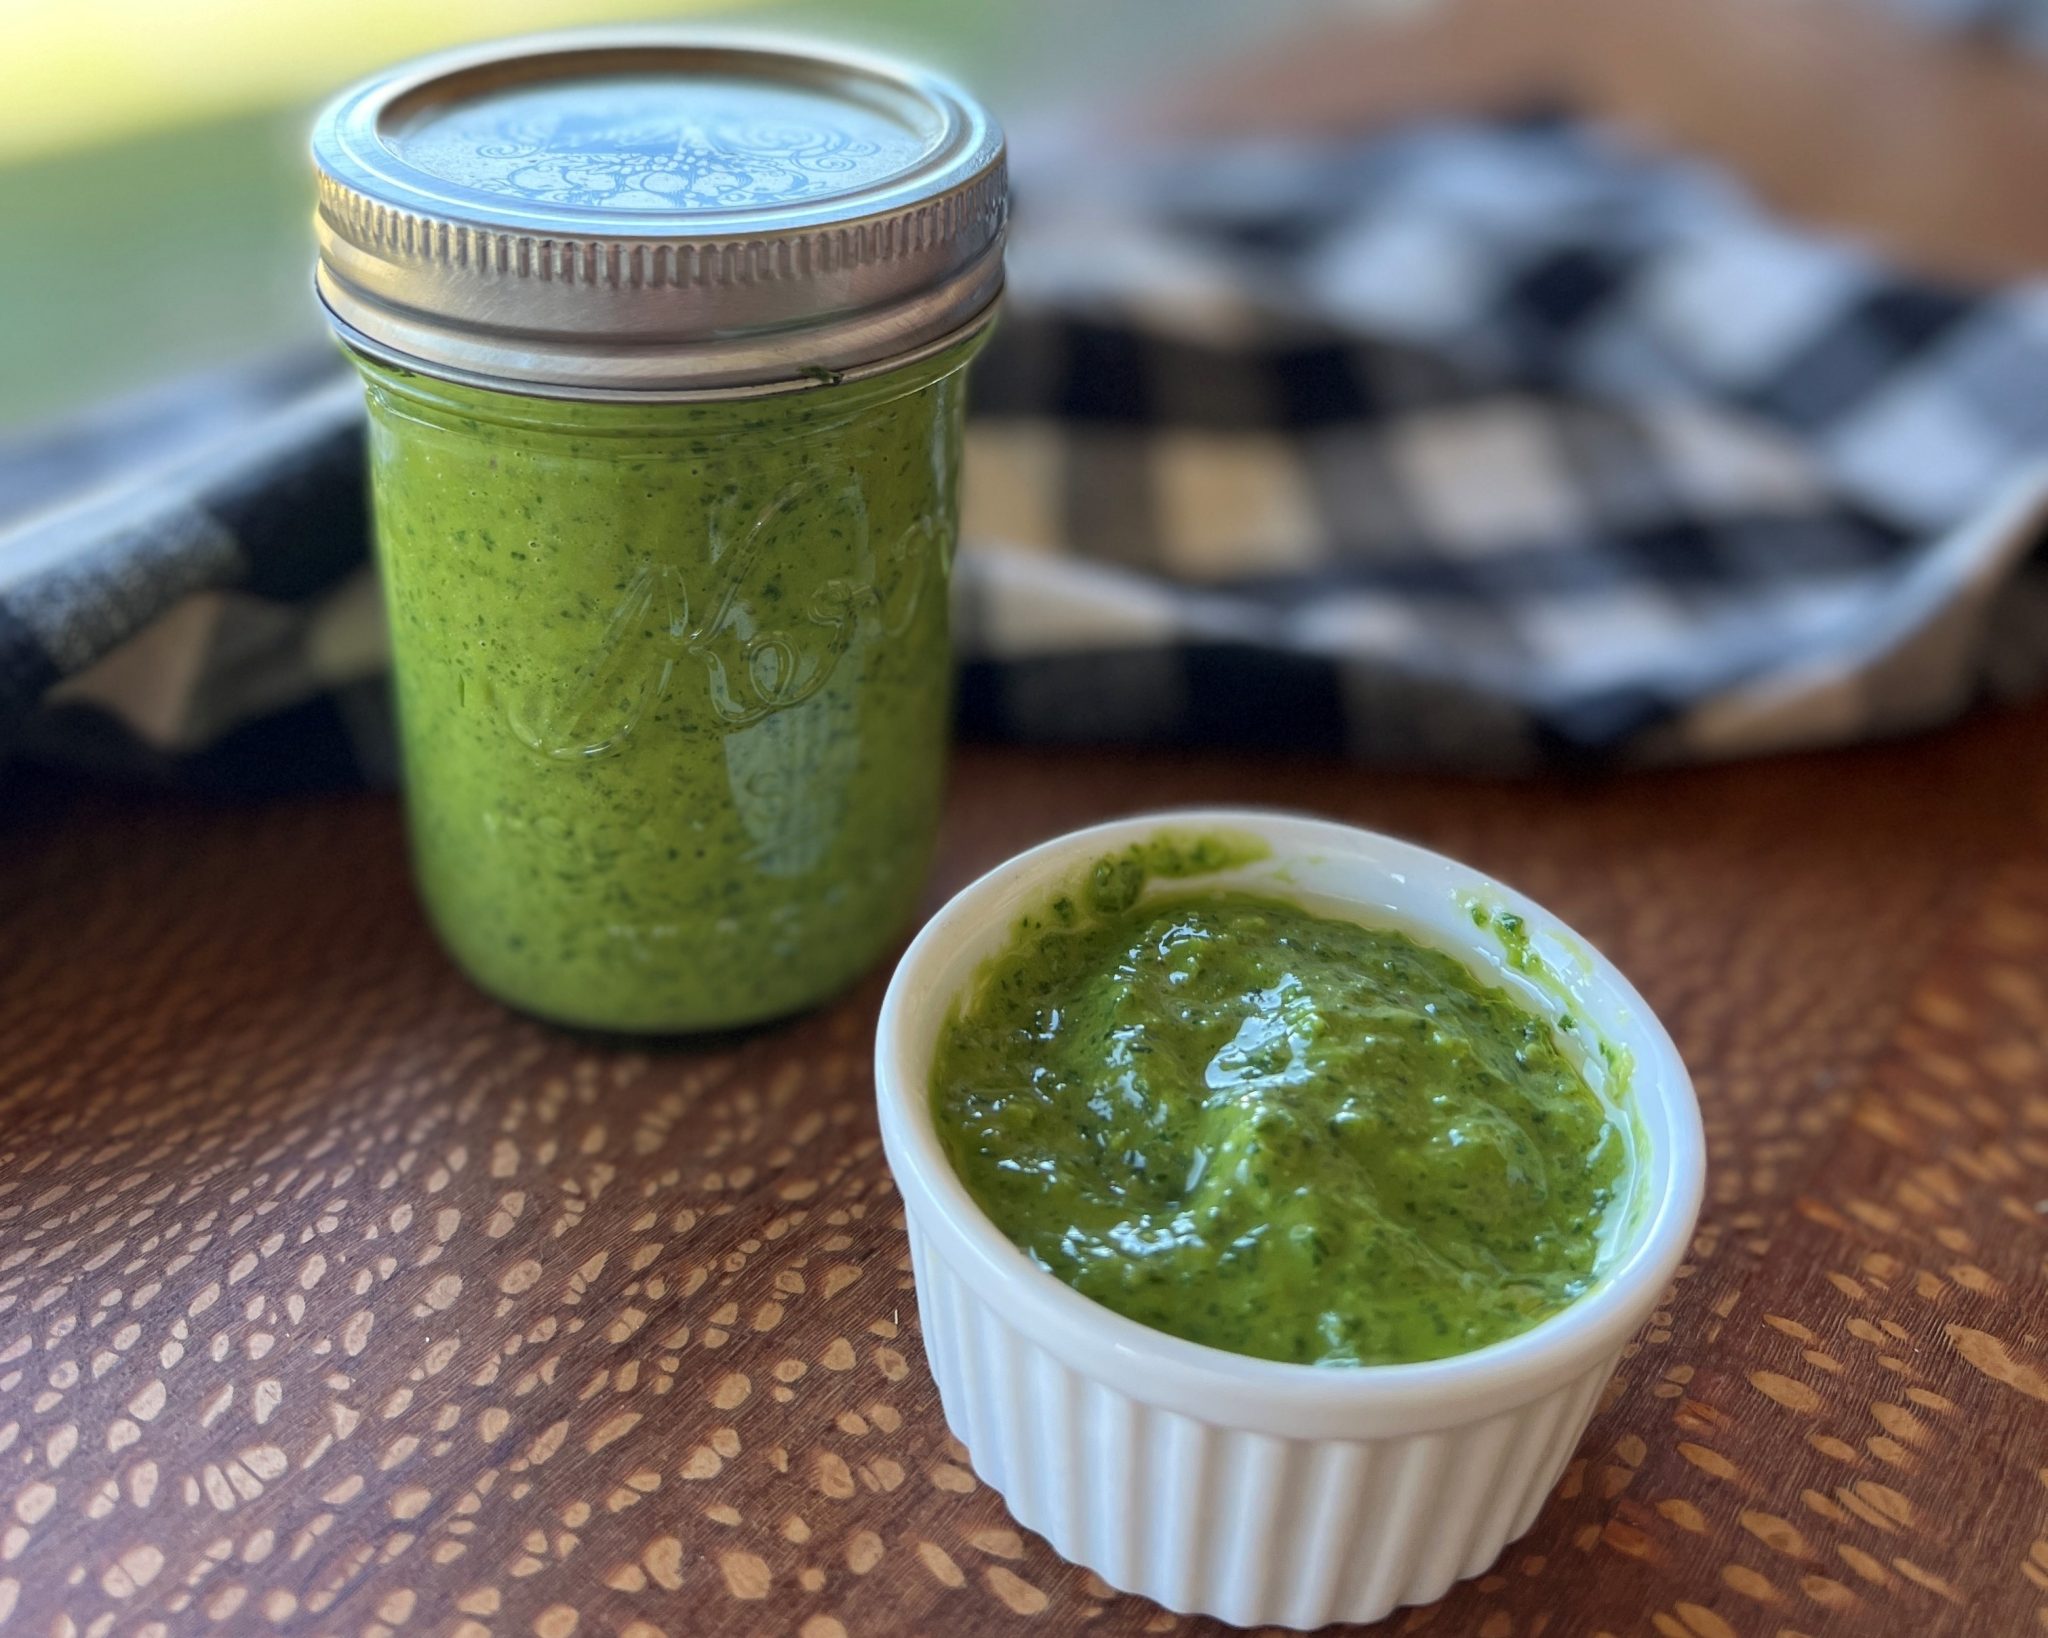 A jar and bowlful of summery green basil sauce.